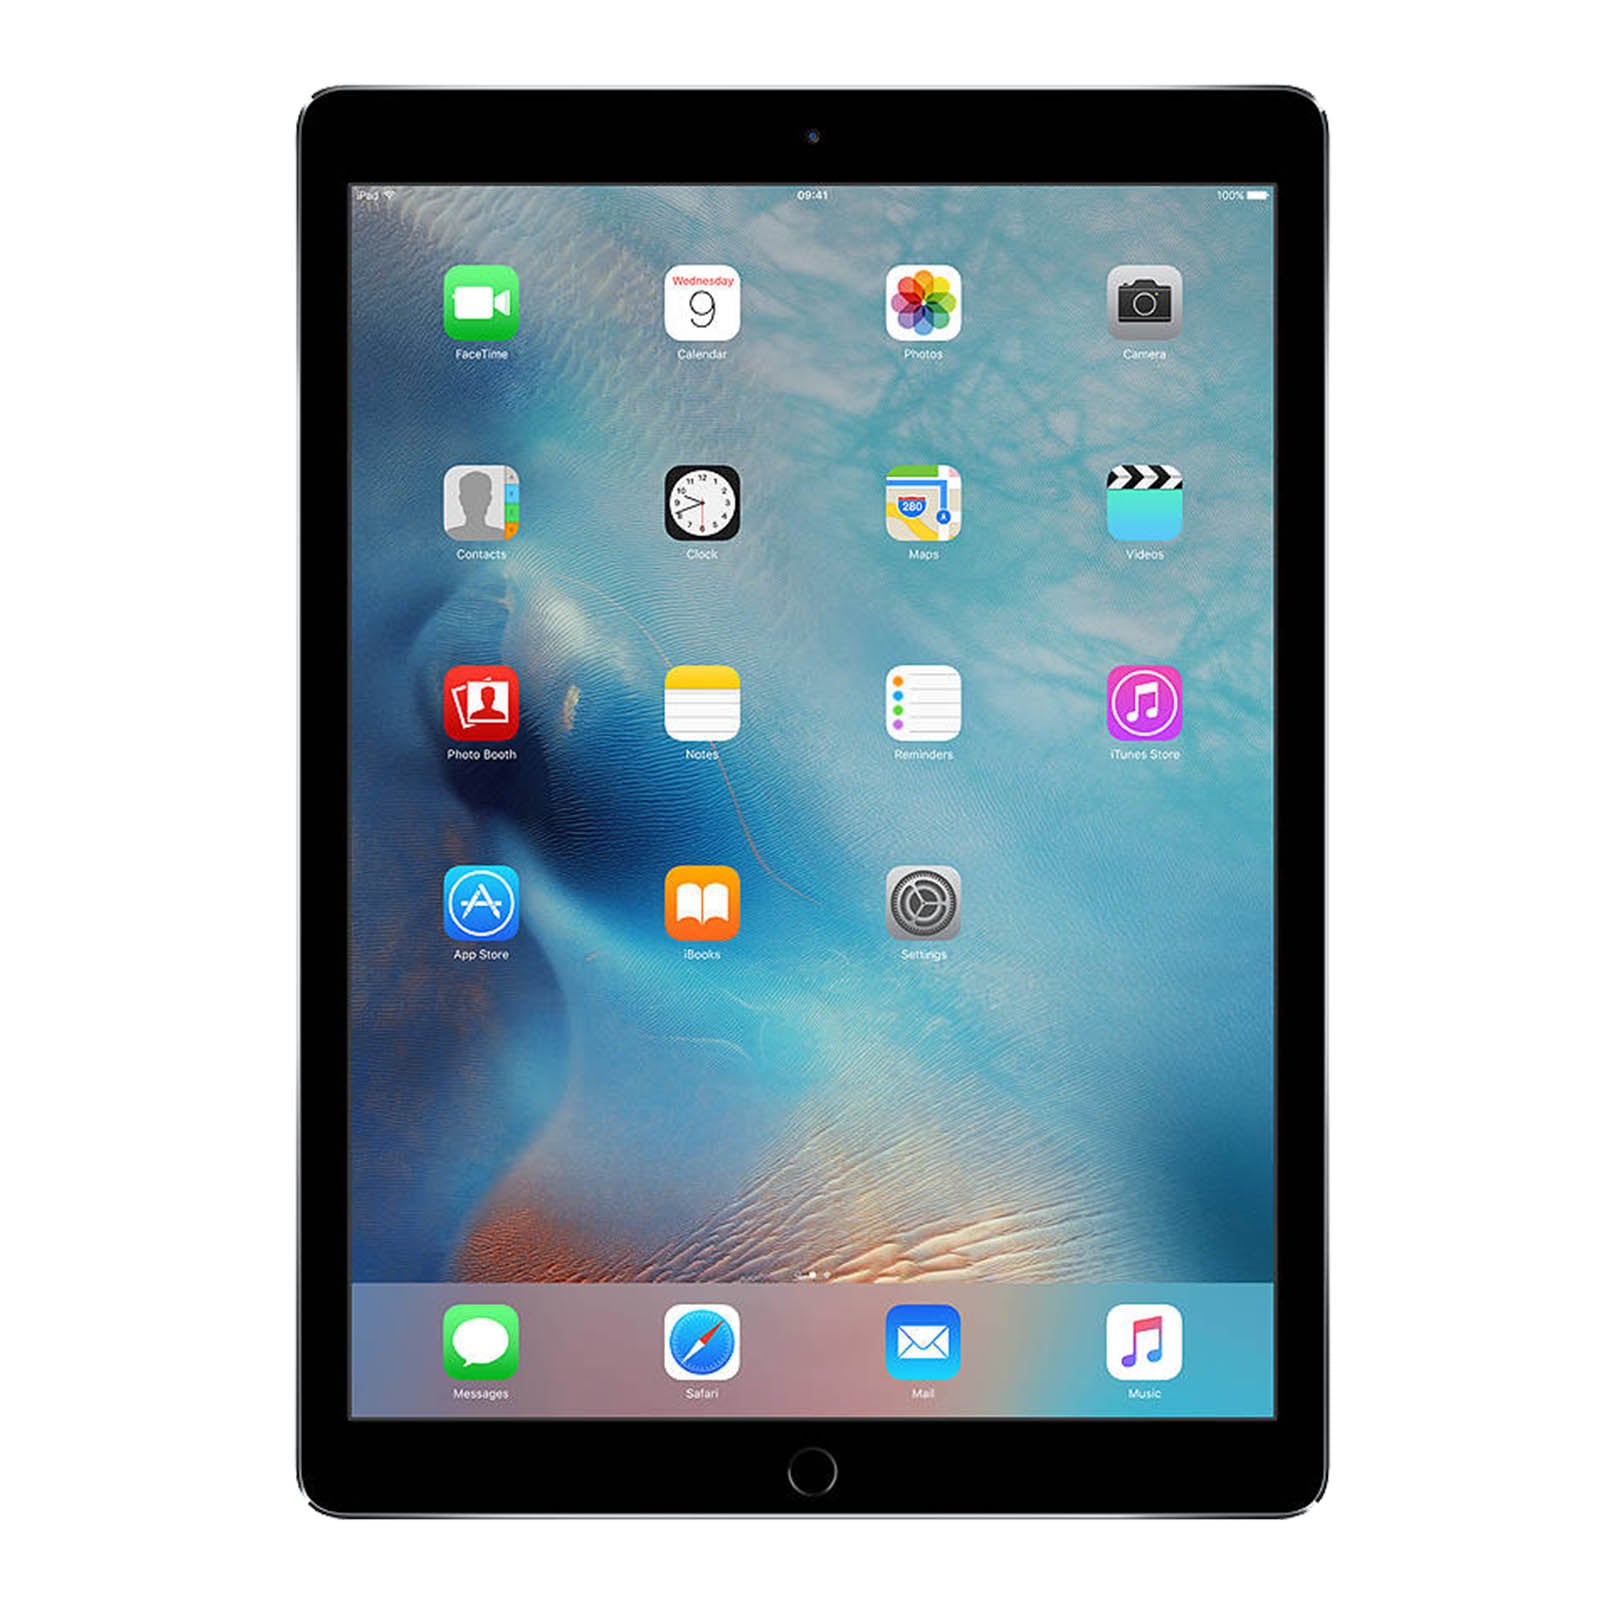 iPad Pro 12.9 Inch 3rd Gen 64GB Space Grey Very Good - Unlocked